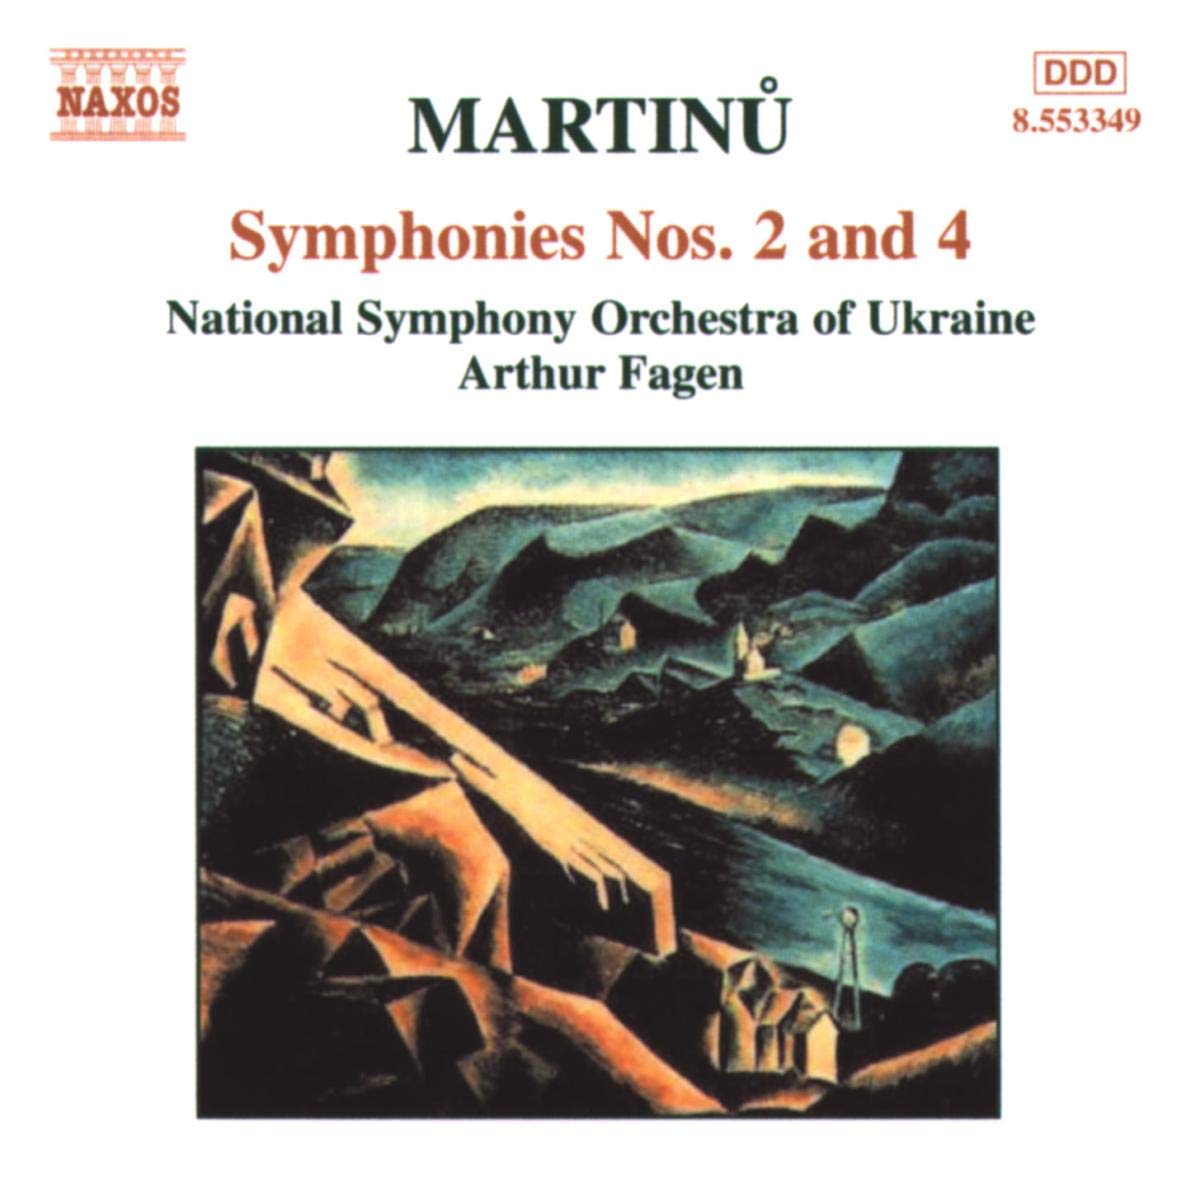 MARTINU: Symphonies nos. 2 & 4